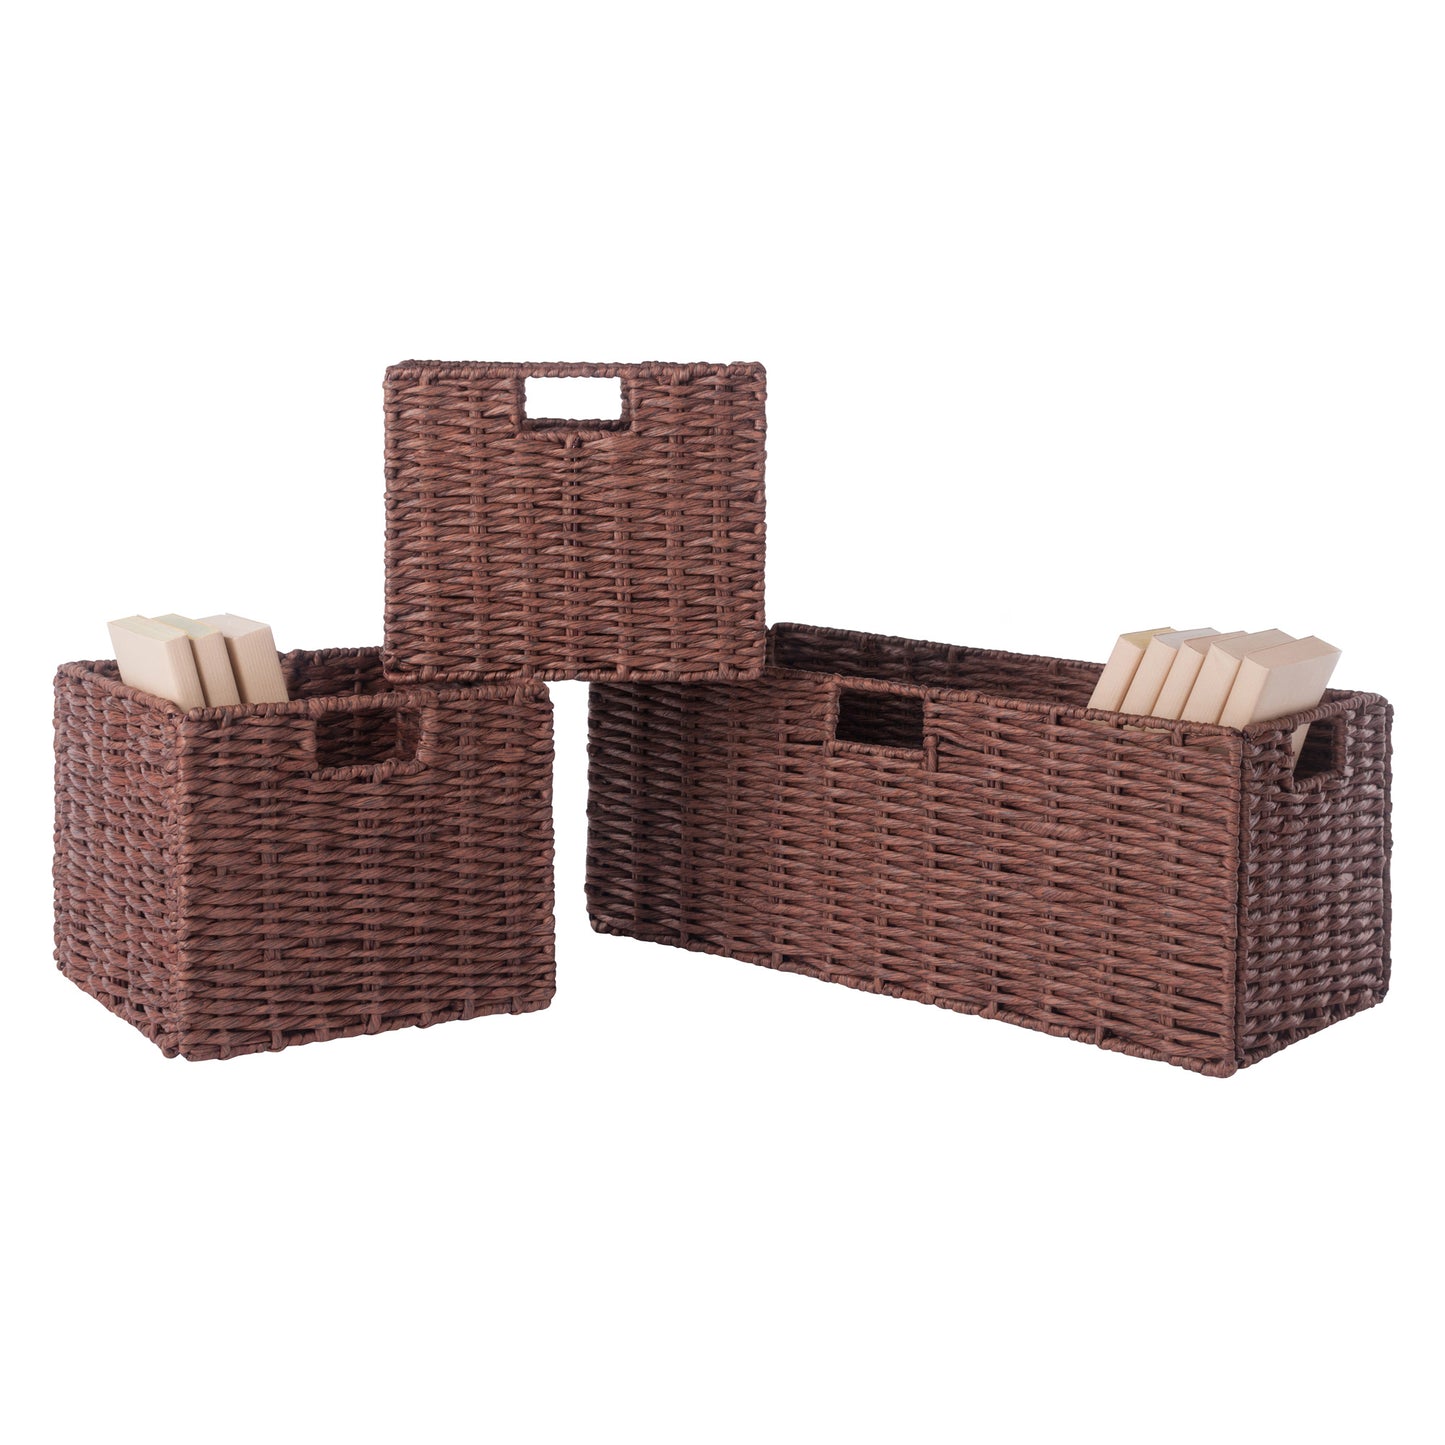 Tessa 3-Pc Woven Rope Basket Set, Foldable, Walnut